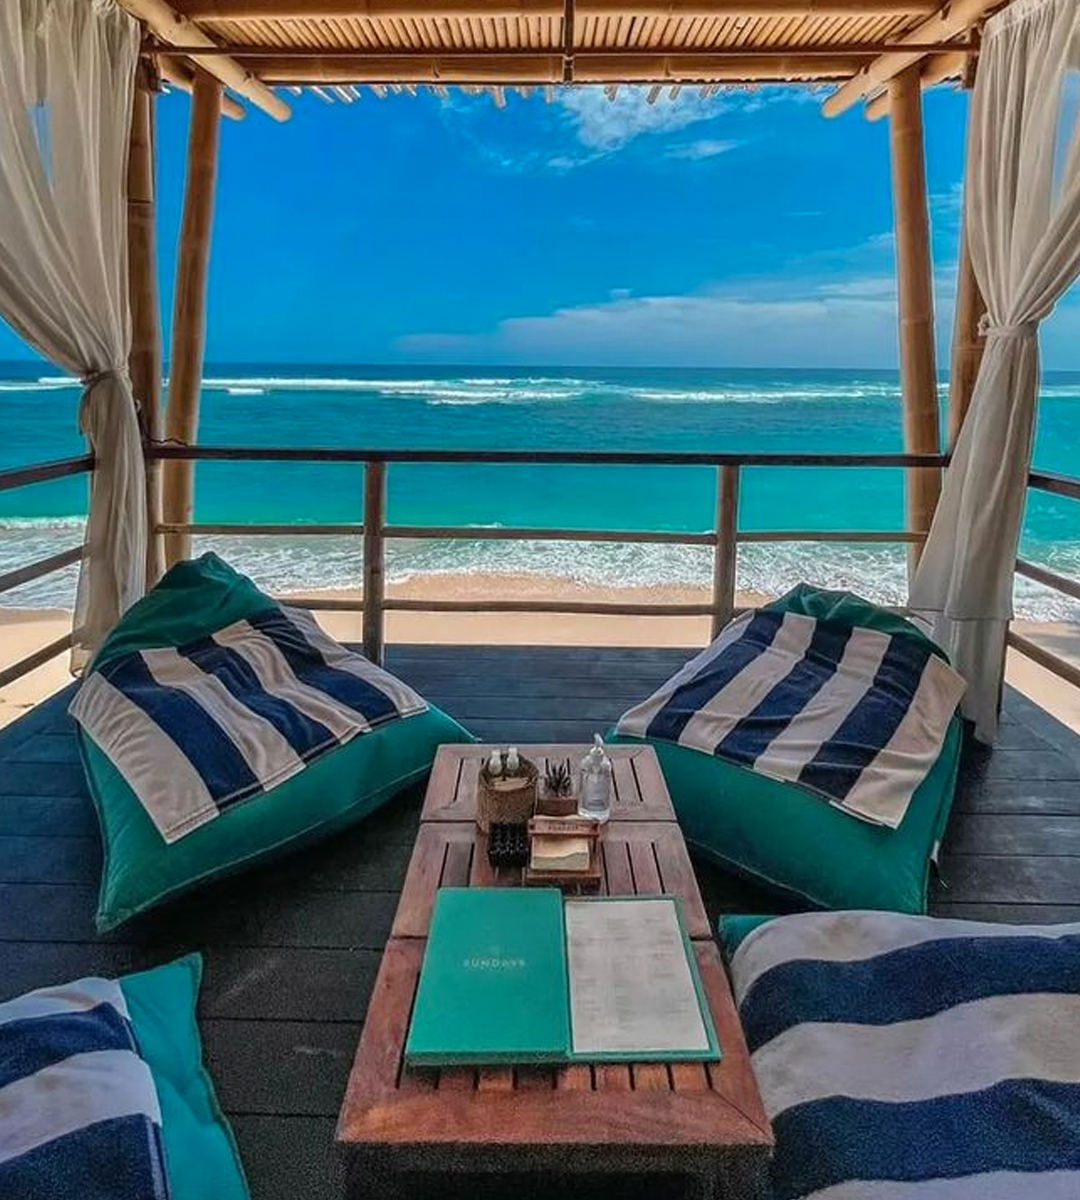 a cabana overlooking the beach on a sunny day